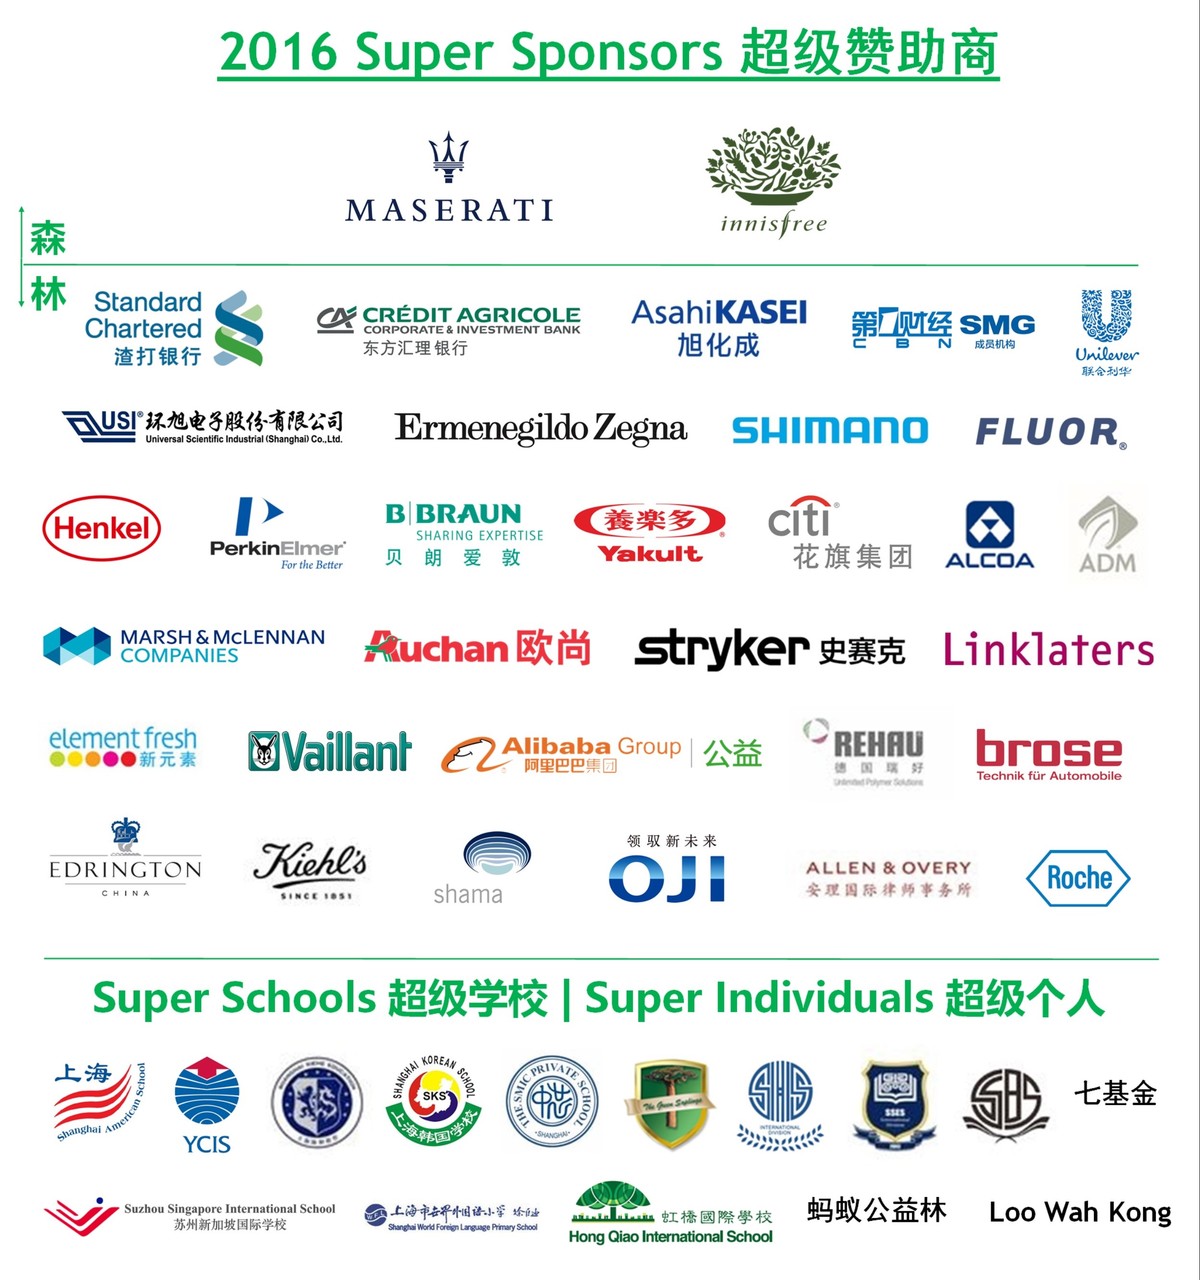 2016 Super Sponsors